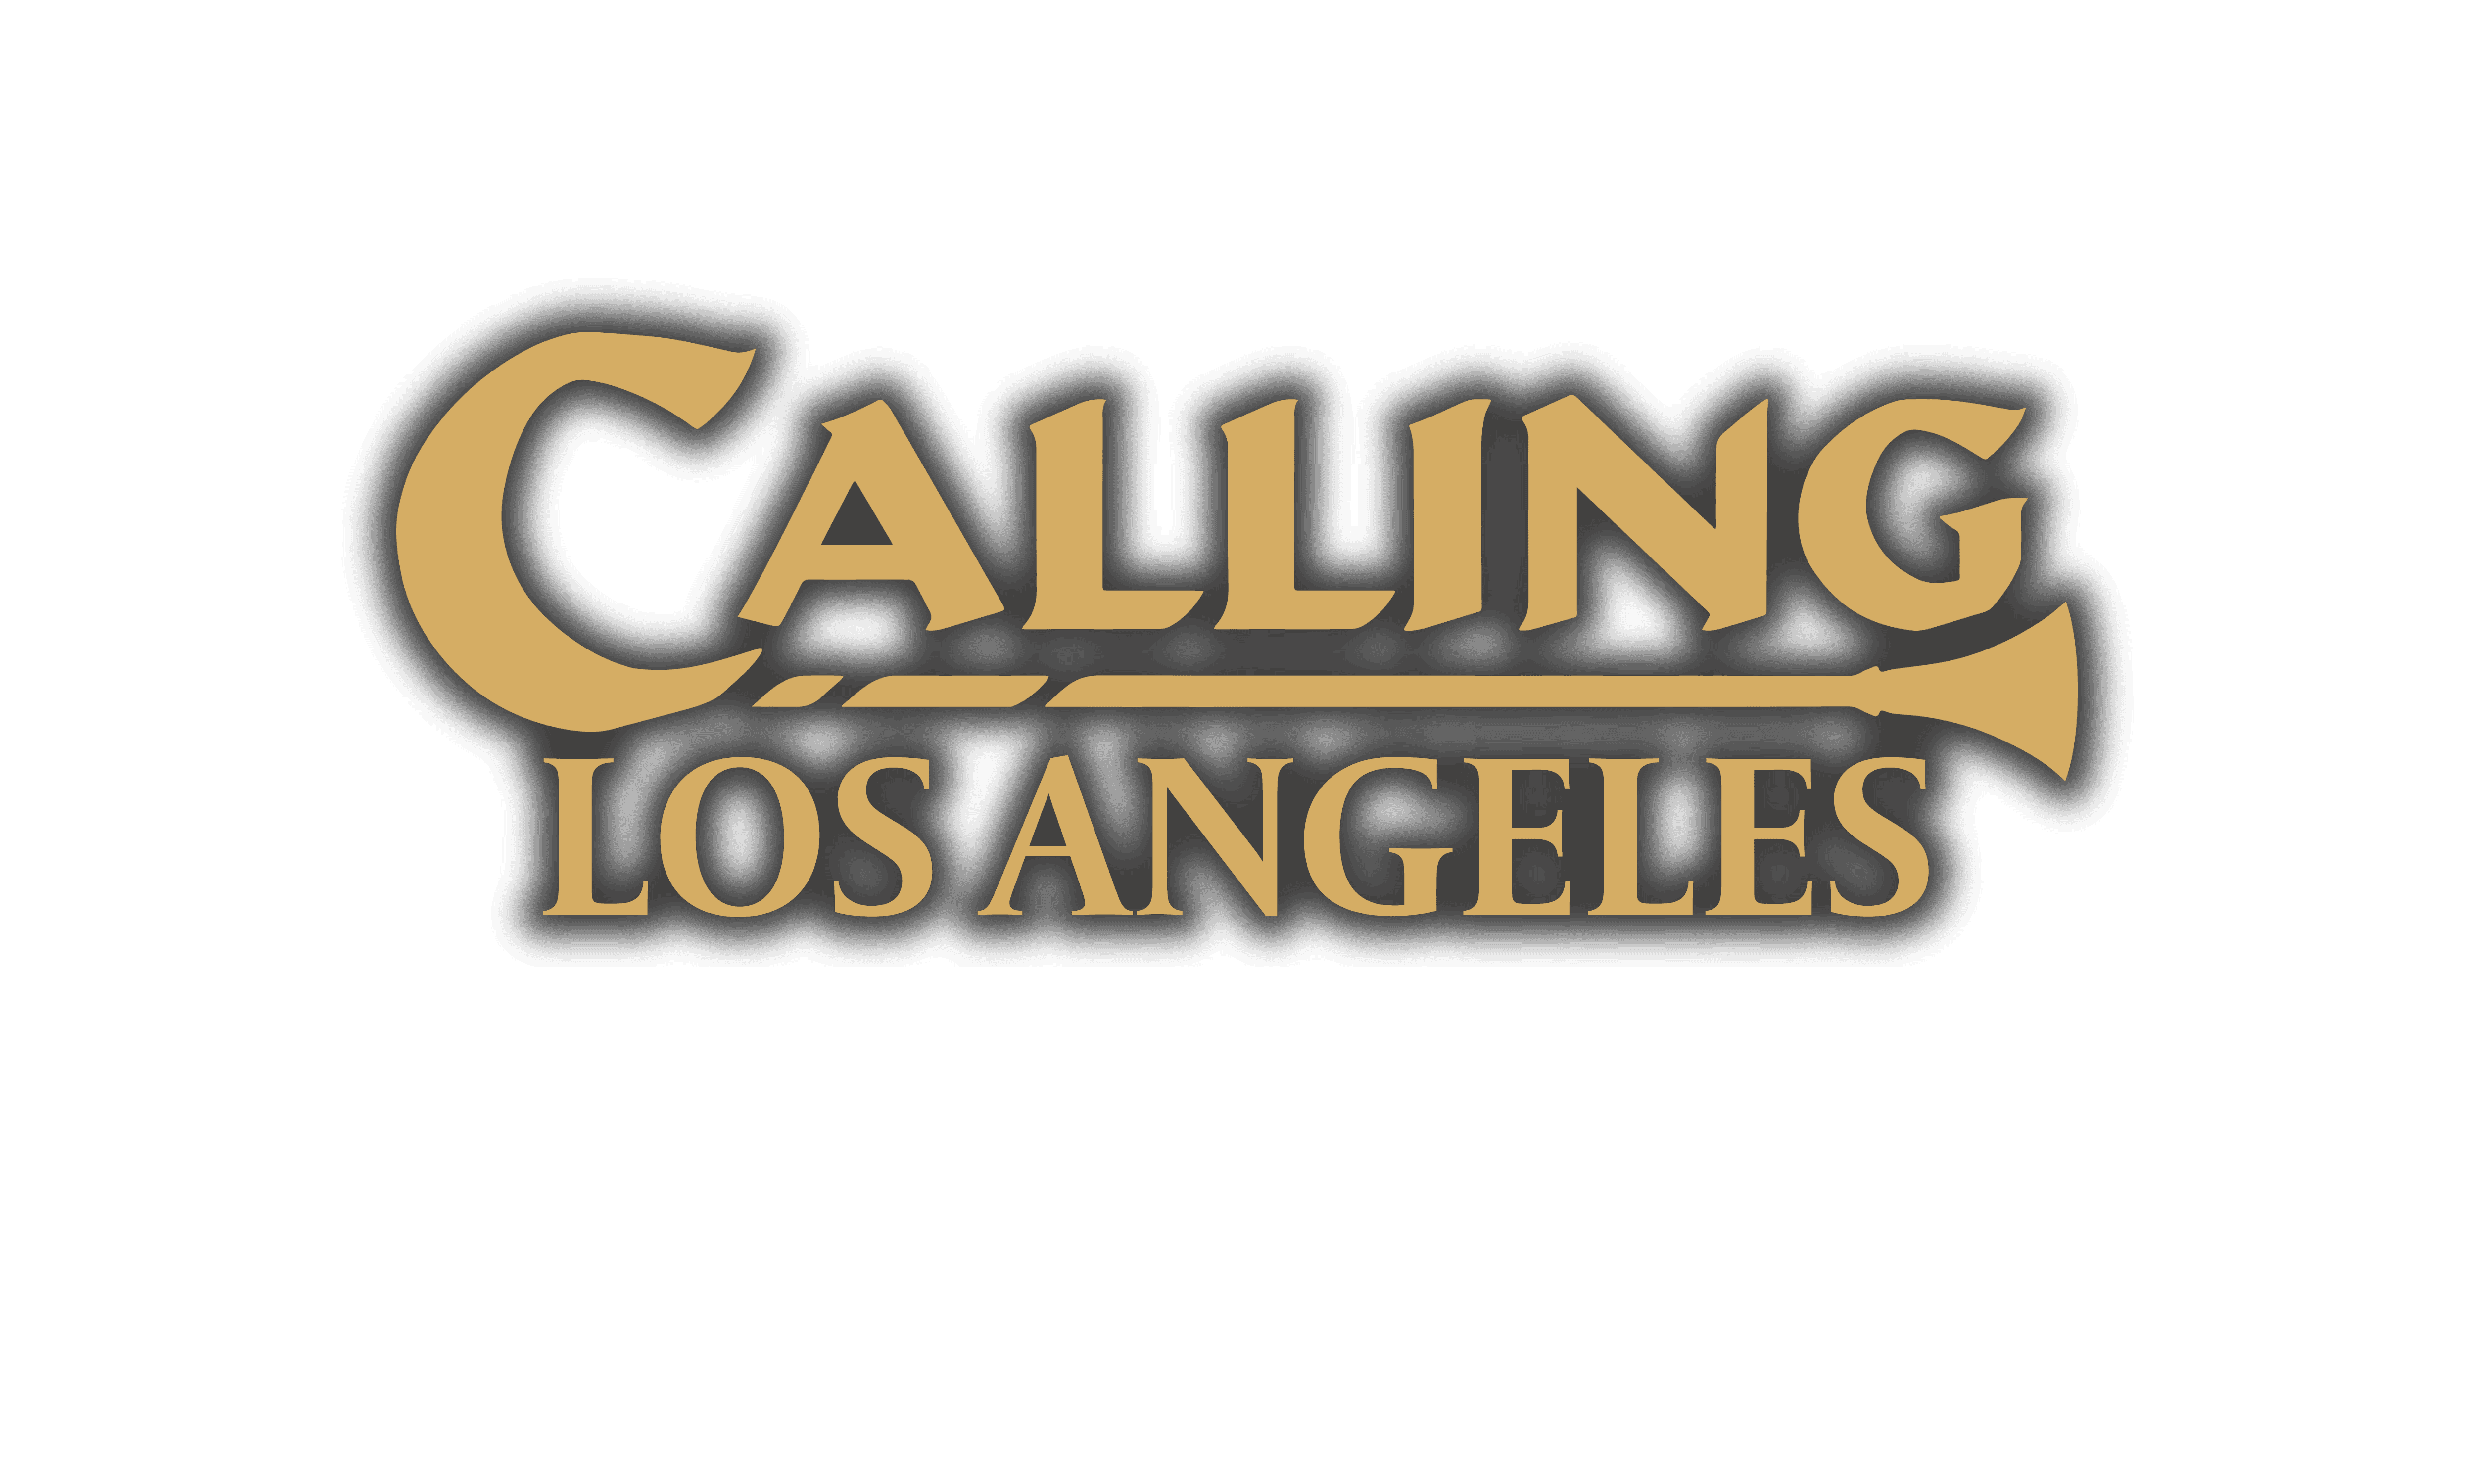 Calling Los Angeles